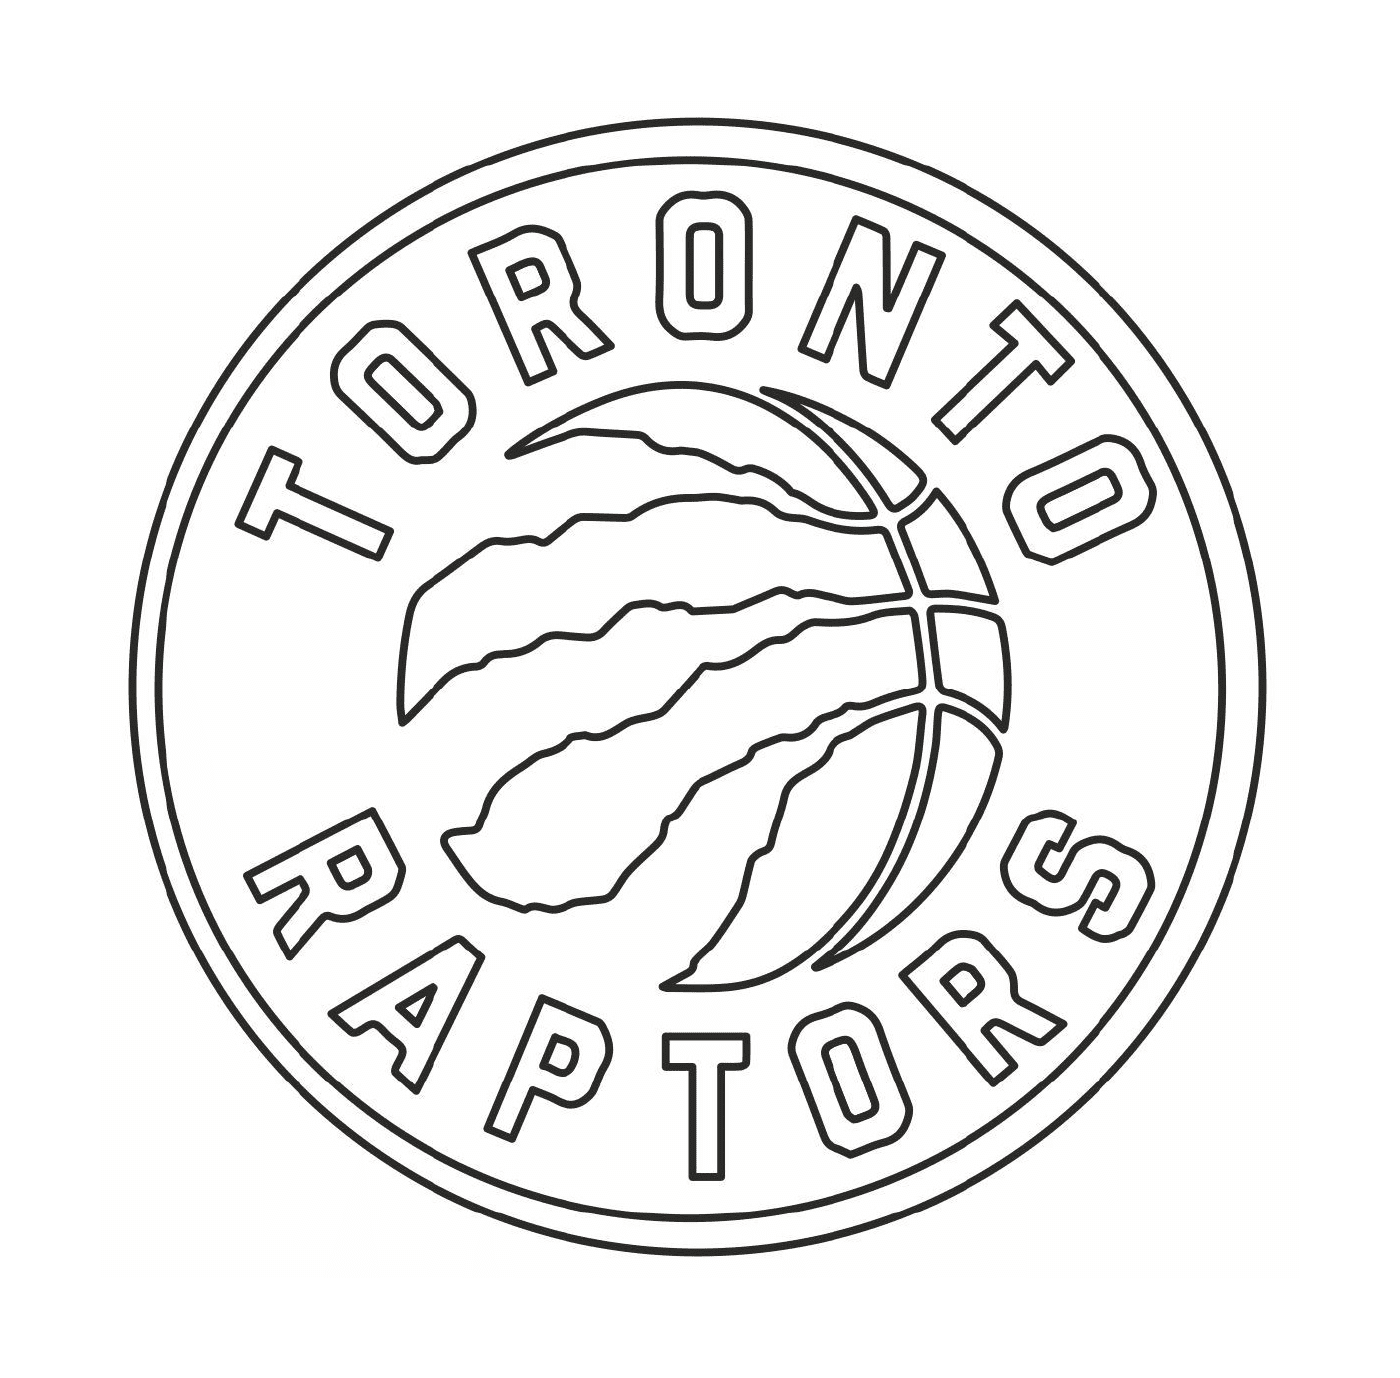  Il logo Toronto Raptors, squadra di basket 